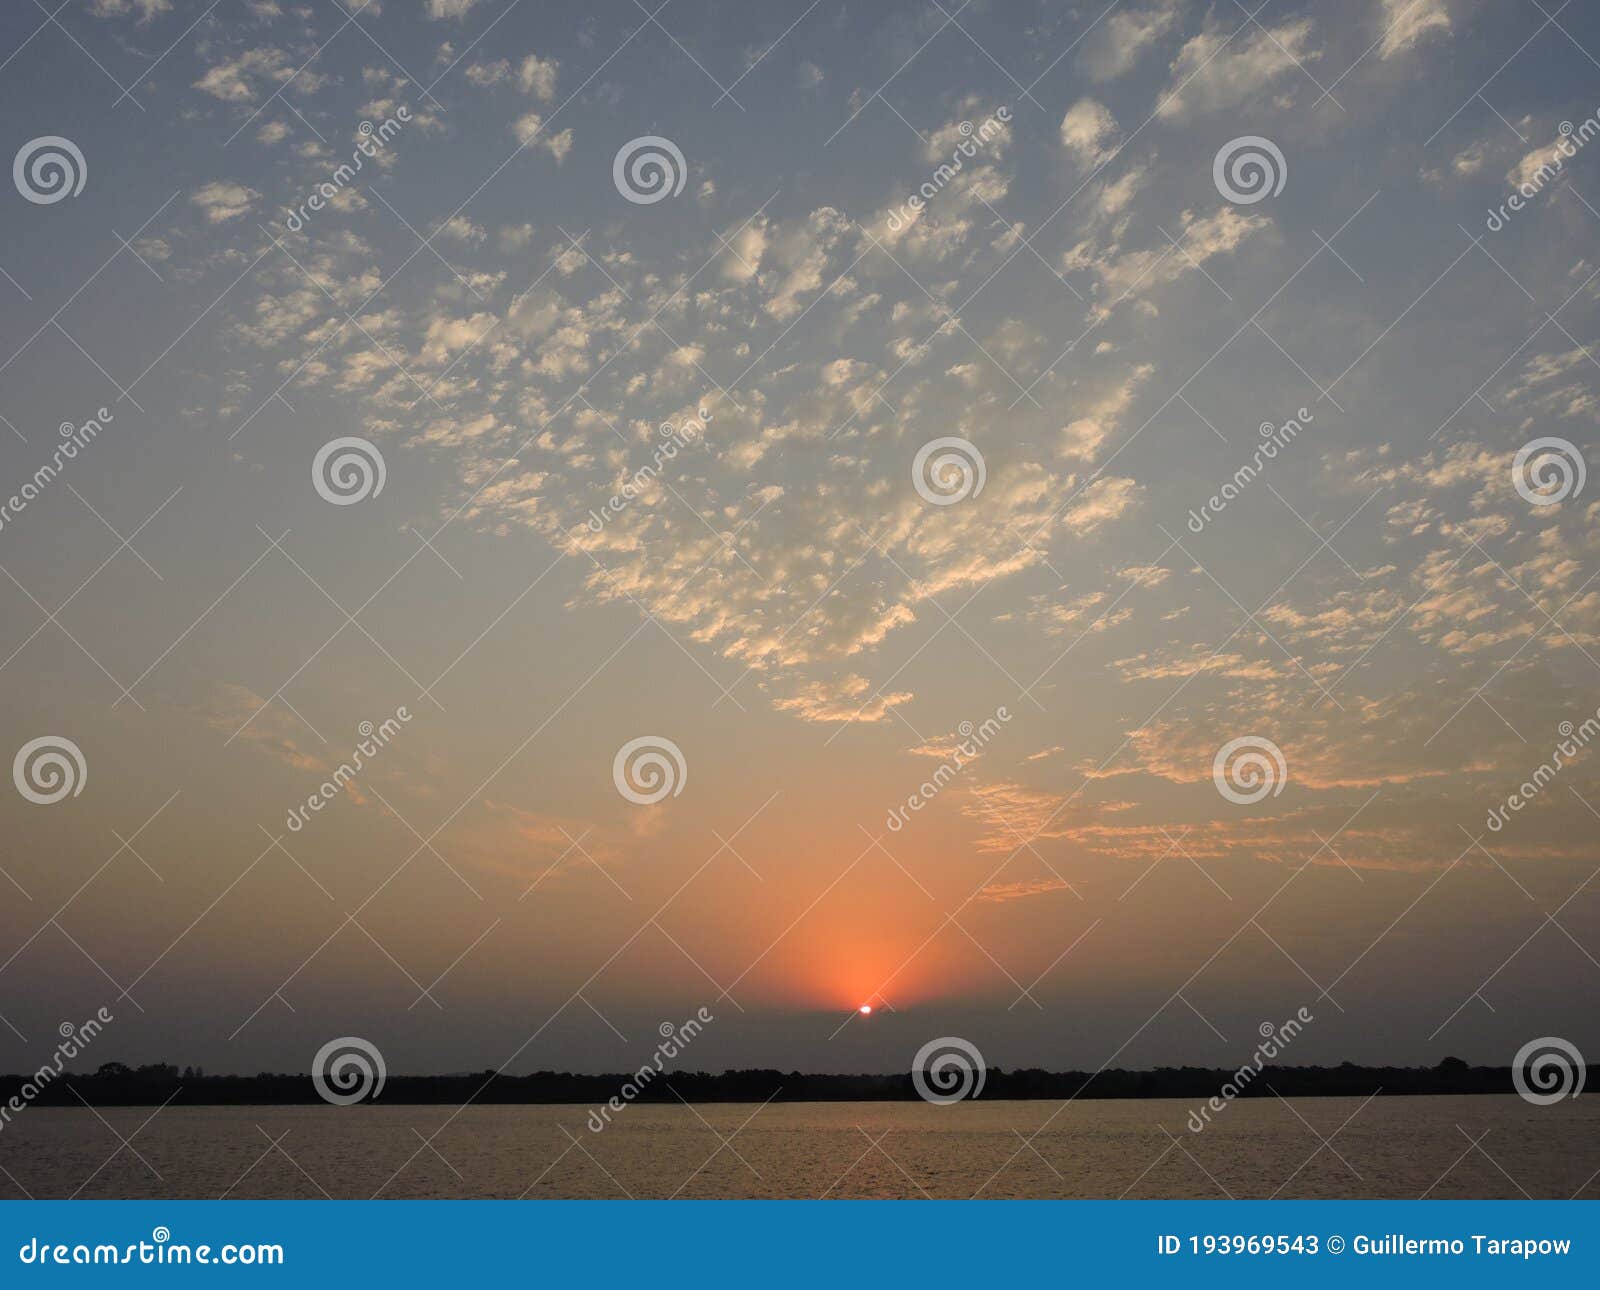 hidrovia paraguay paranÃÂ¡ rayos sol entre las nubes. sunset at de water way paraguay parana